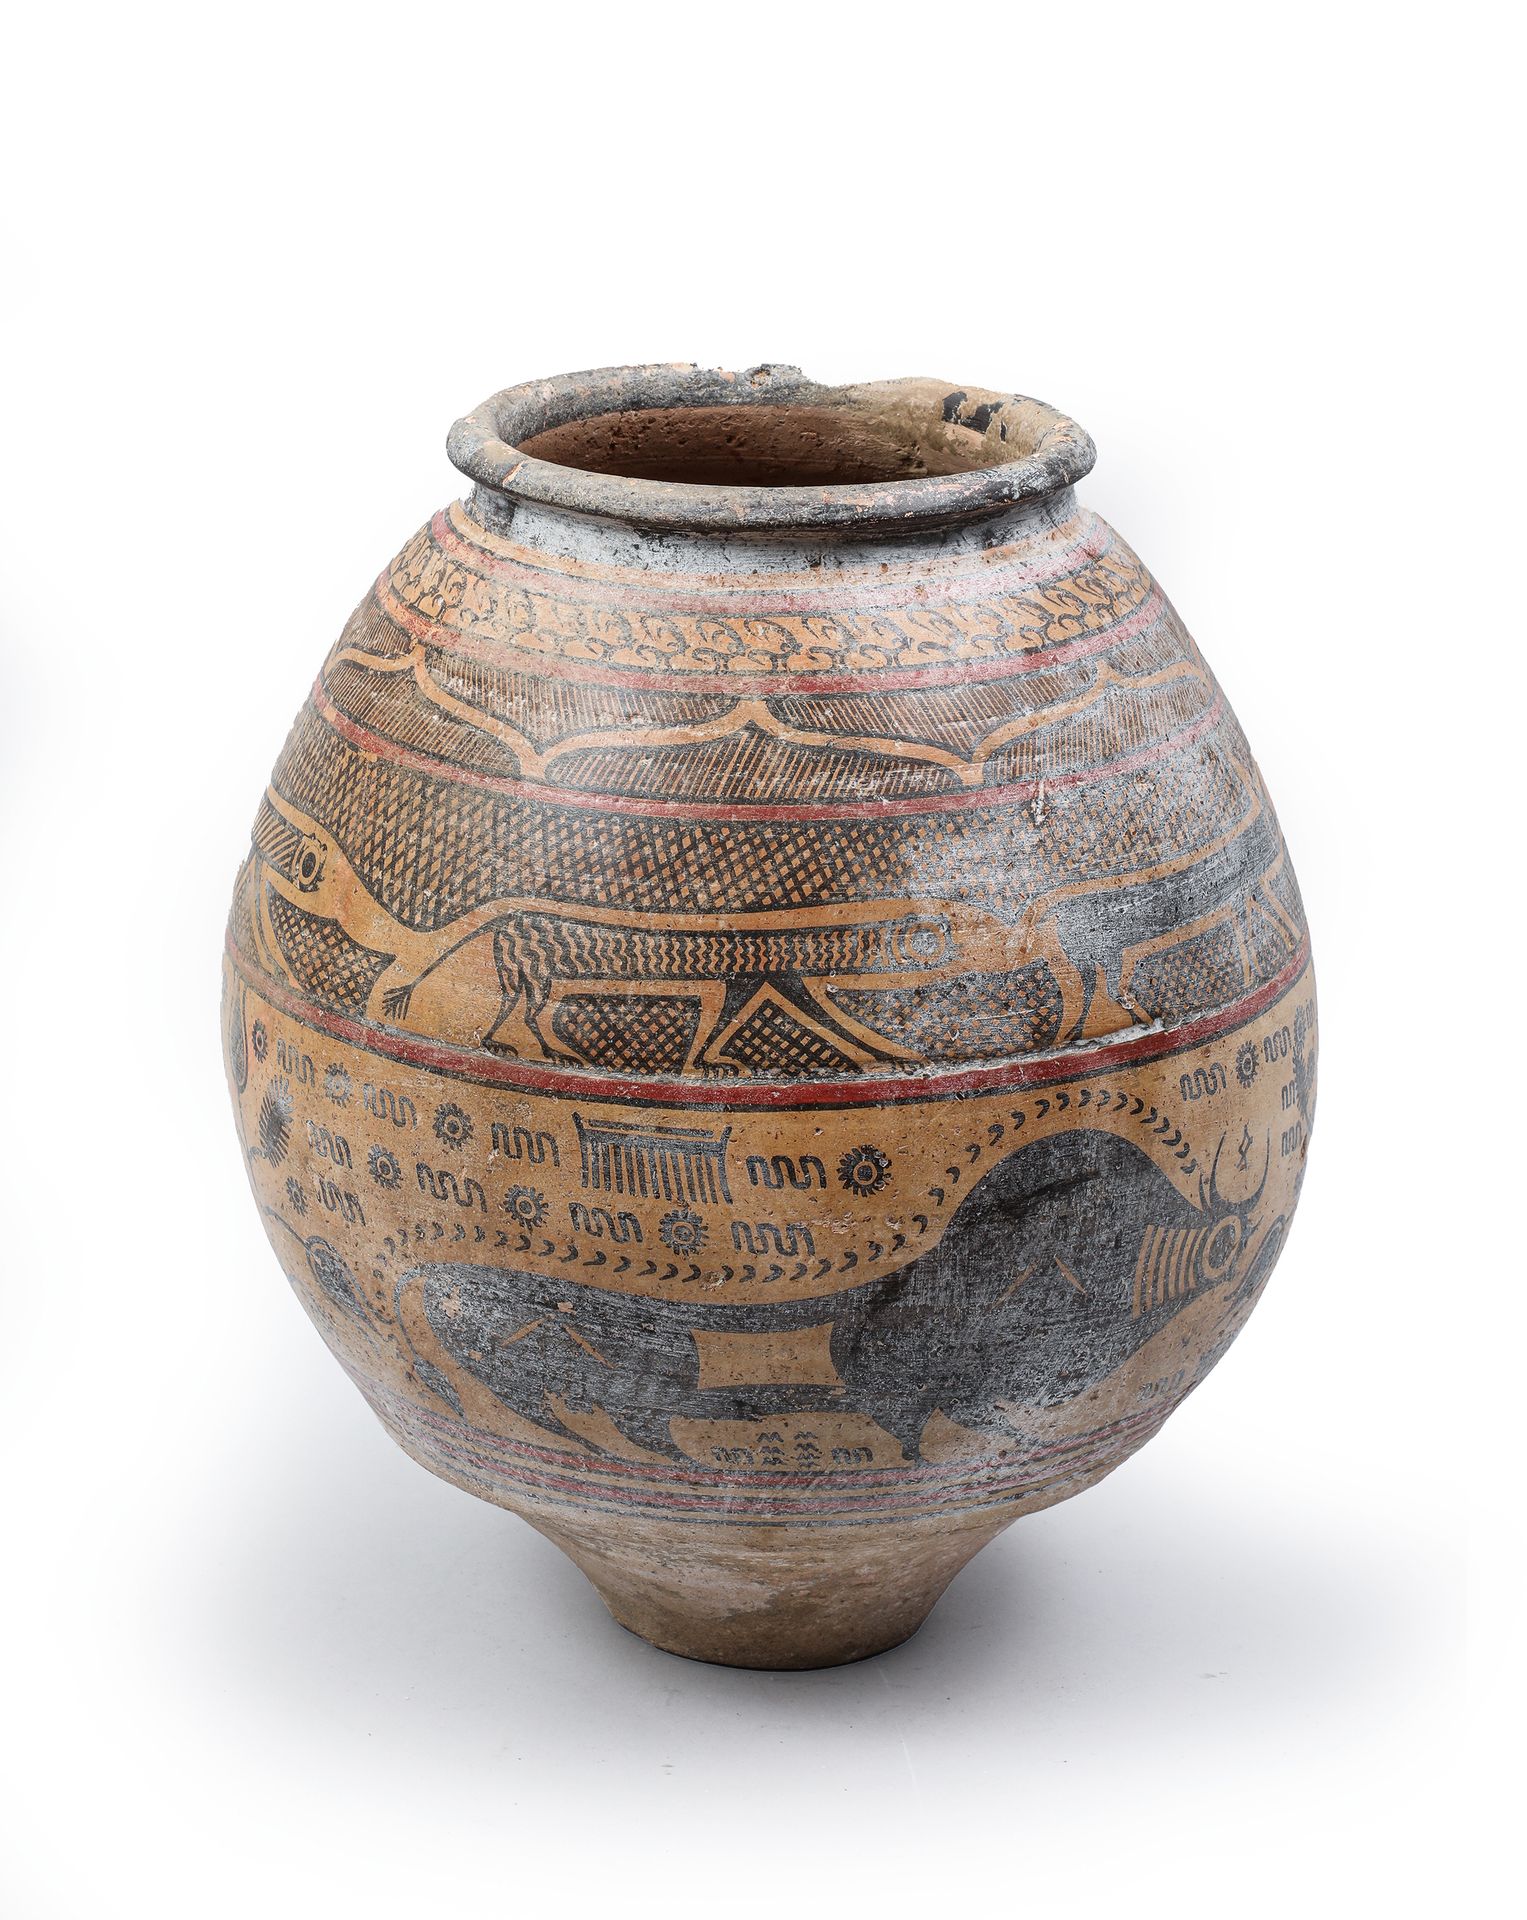 Null 
带水牛装饰的陶制花瓶。Mehrgarh公元前2700年(关于所有多色性的亮点)

H.46厘米